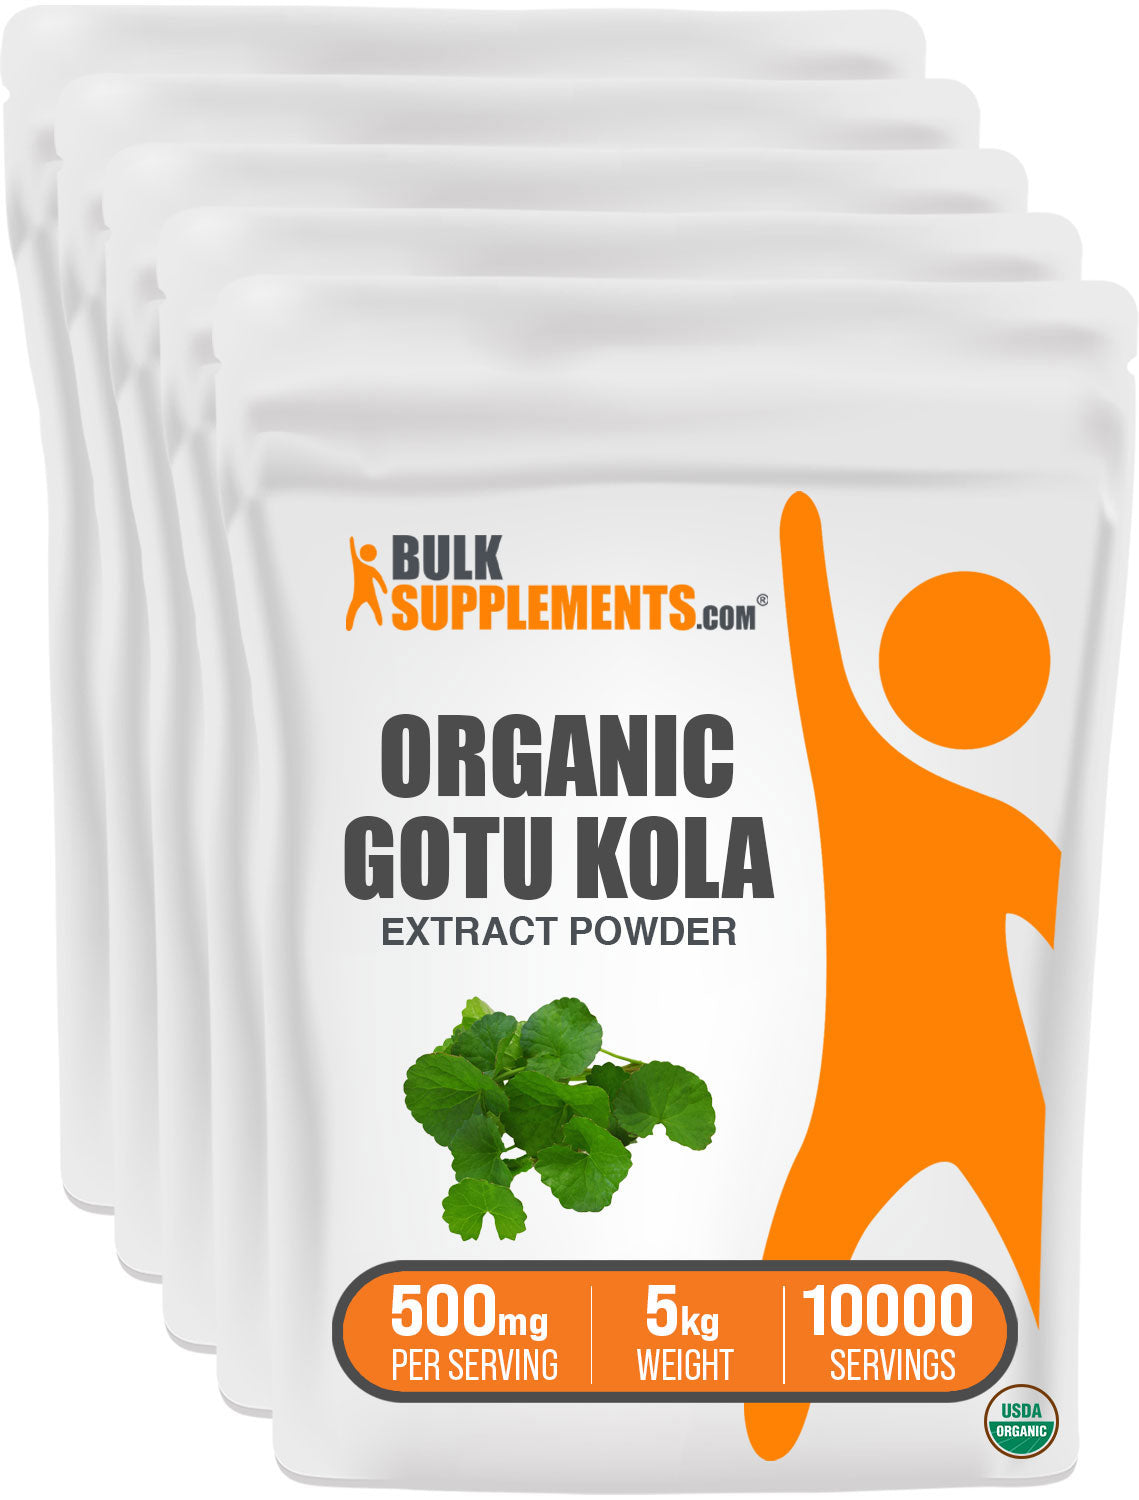 BulkSupplements.com organic gotu kola extract powder 5kg bags